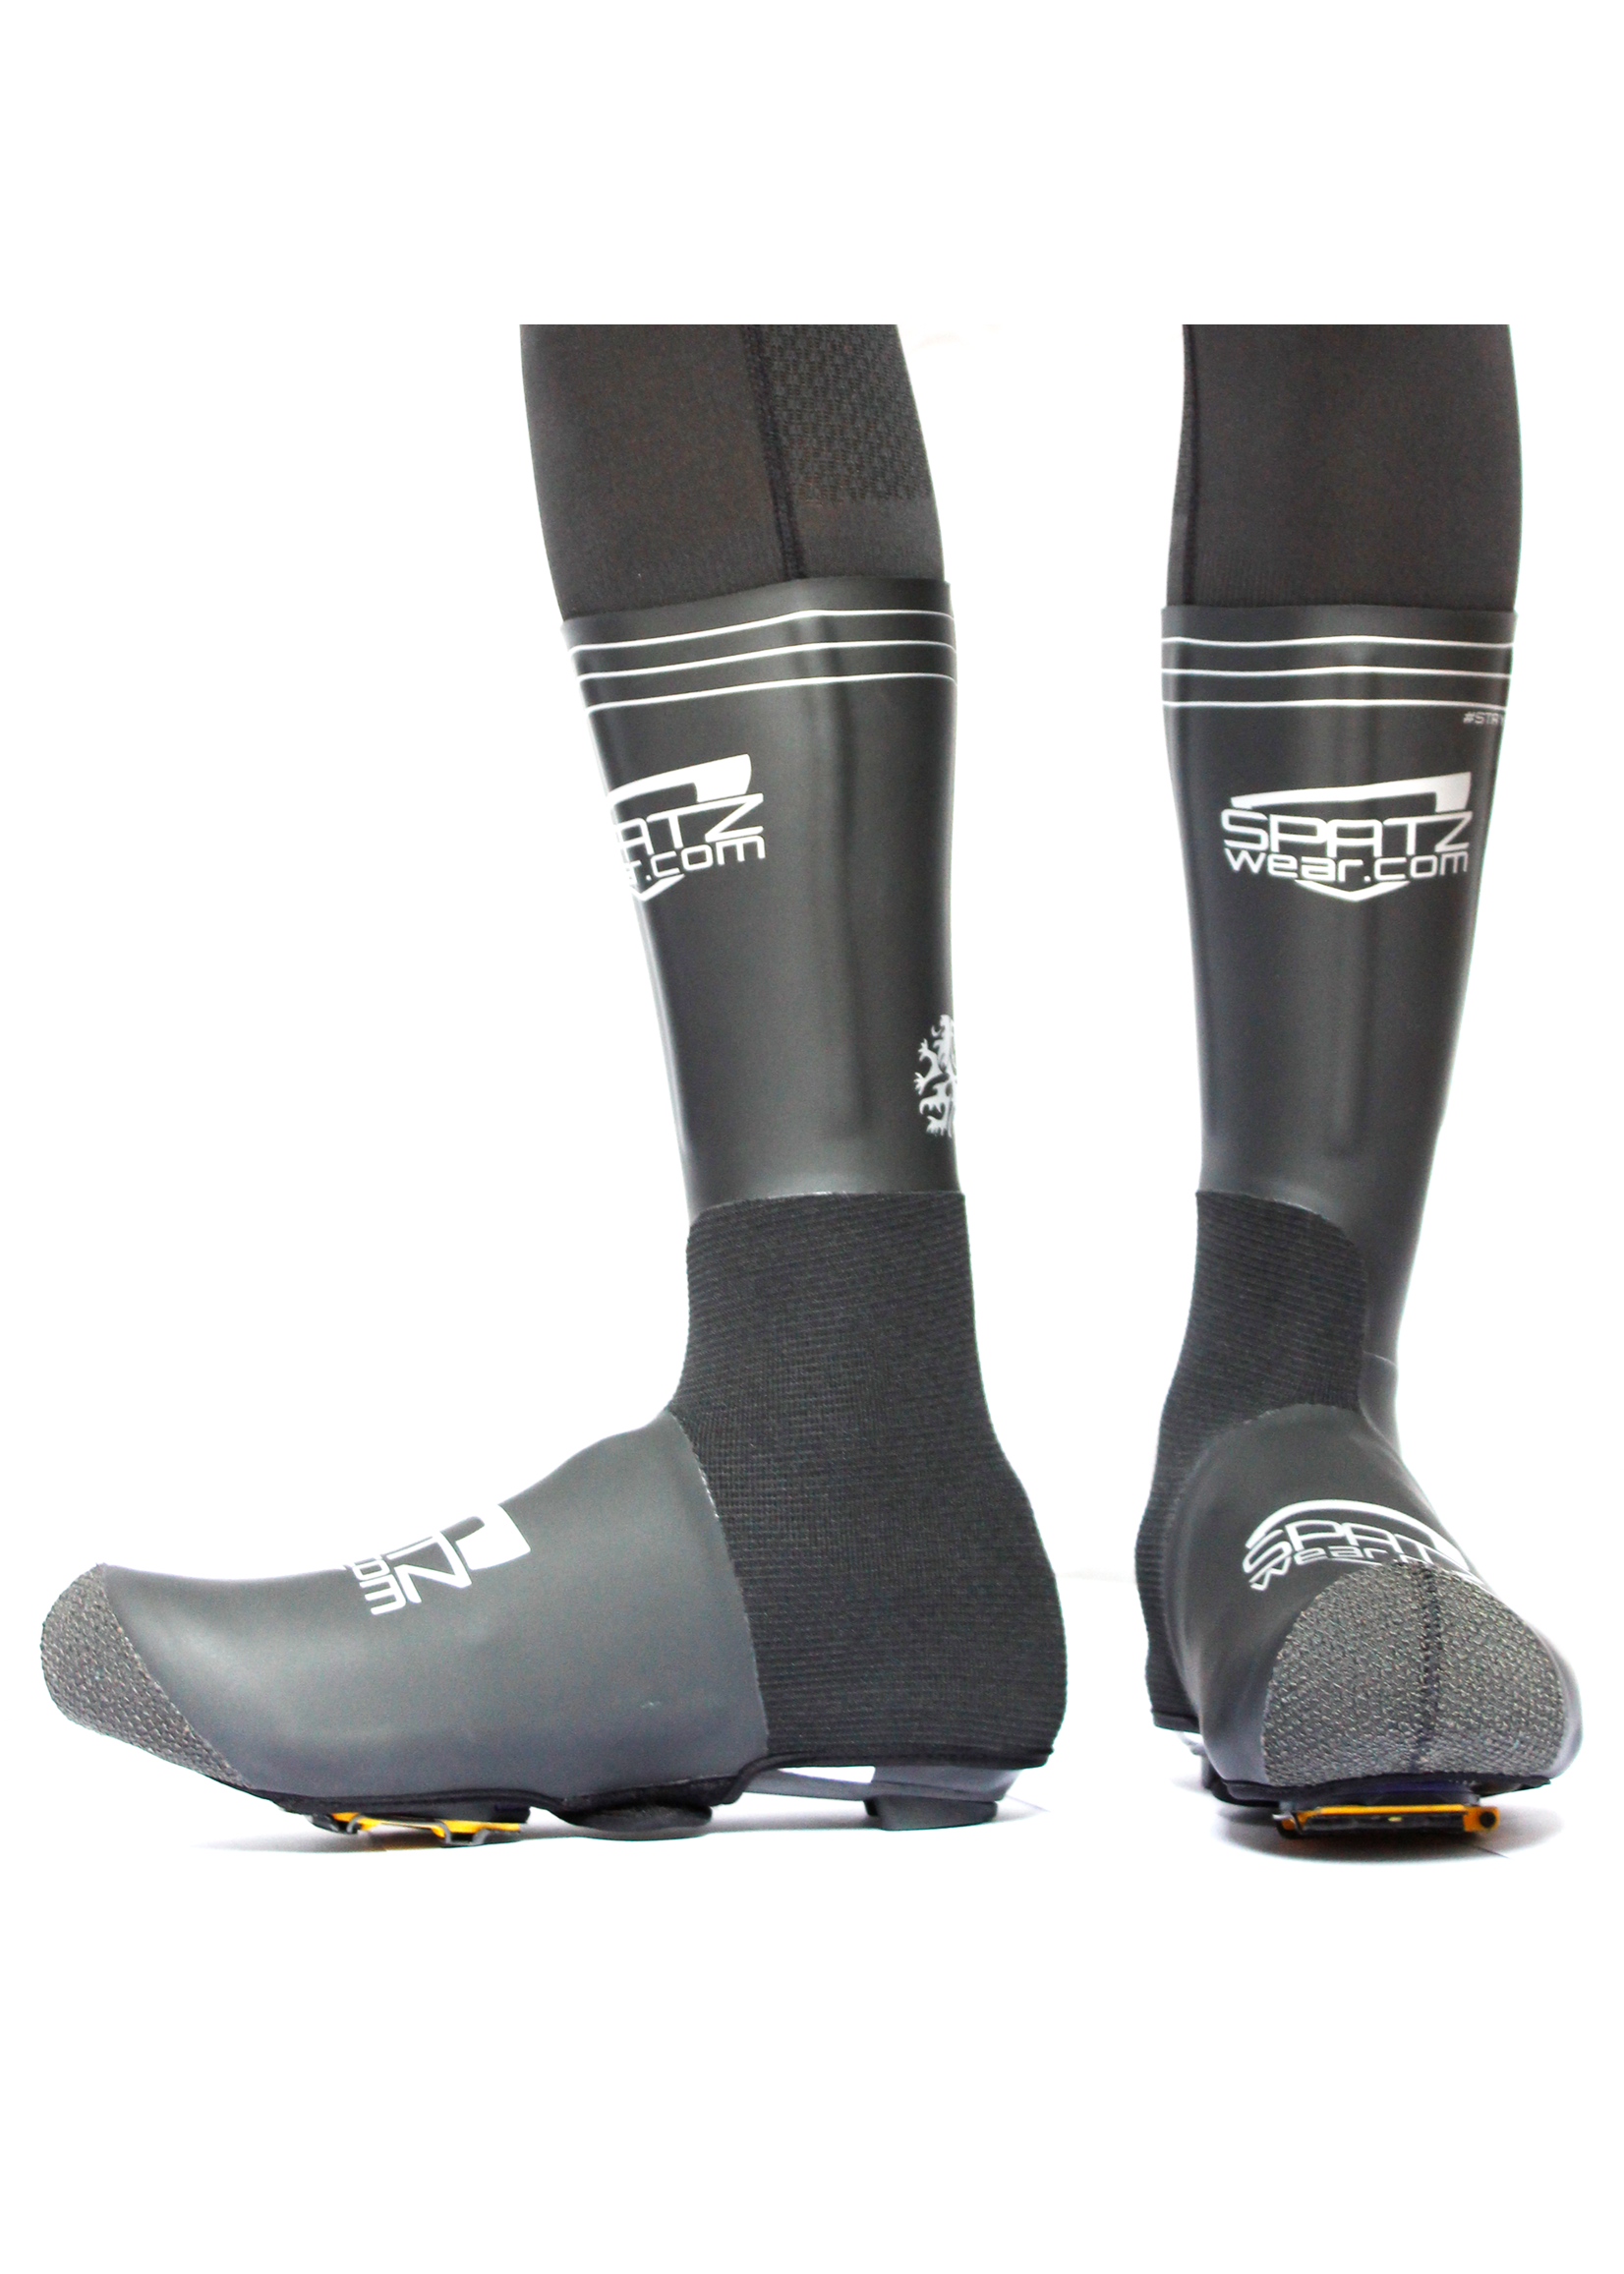 Spatz SPATZ Legalz PRO UCI Legal Race Overshoes with Kevlar toe area